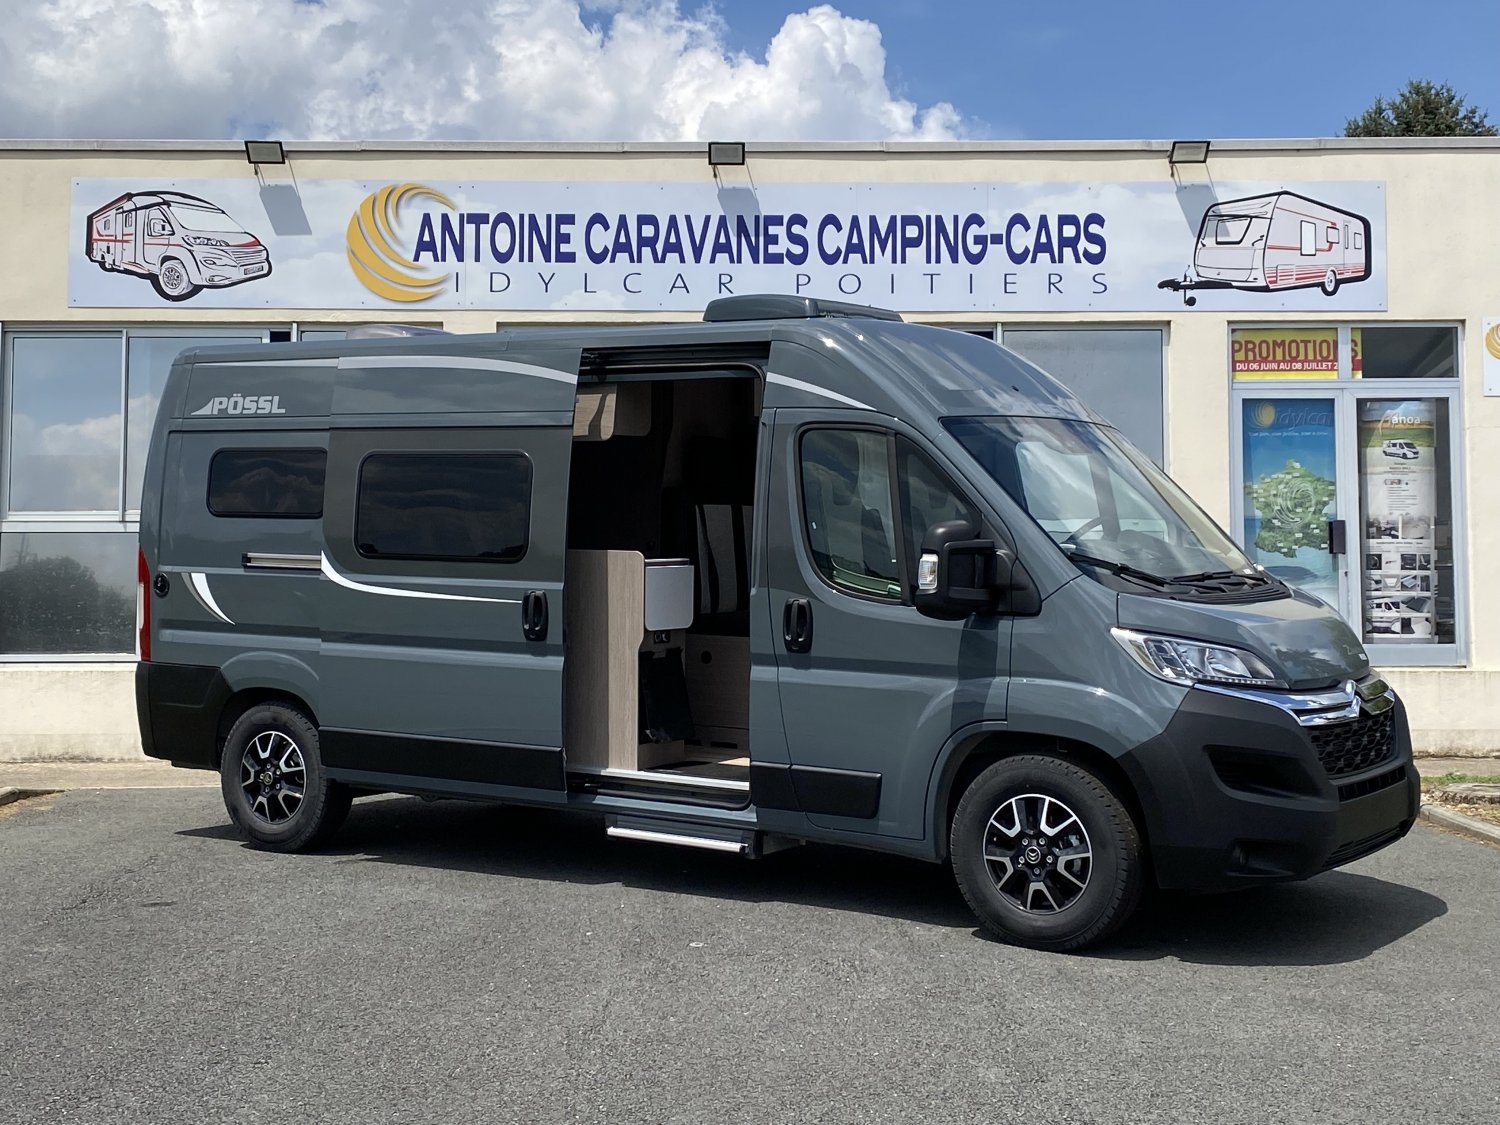 Antoine Caravanes et Camping Car - Possl 2WIN PLUS à 63 400 €